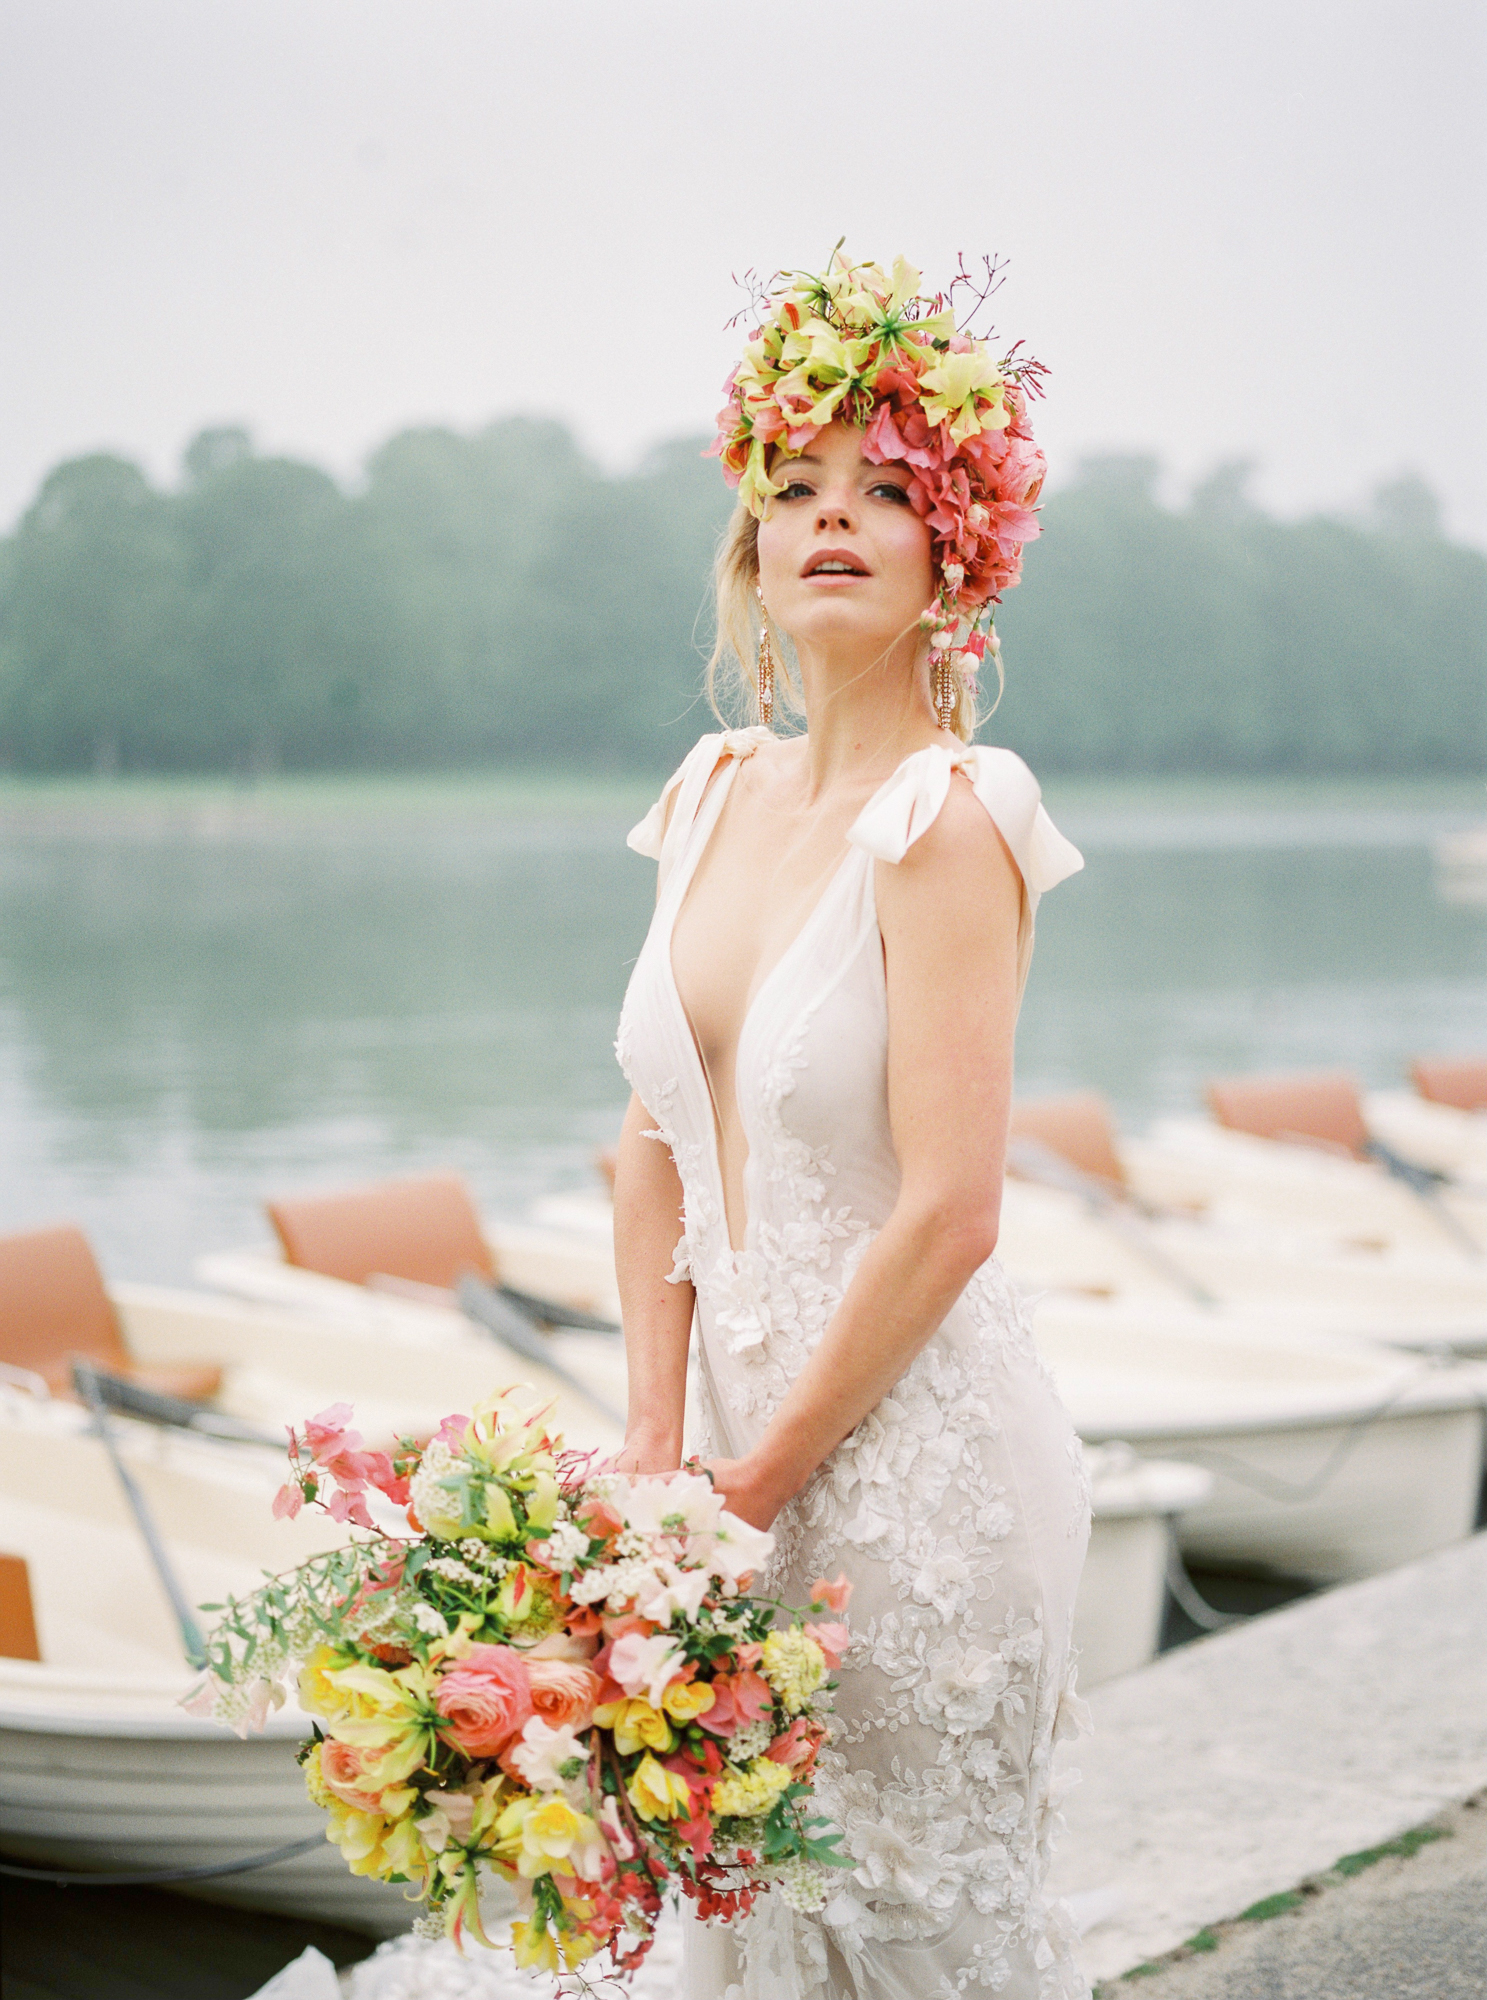 travellur_photoshoot__summer_in_versailles_wedding_flowers_bridal_luxe_shoot_floral_france_bride_head_dress_bouquet.jpg